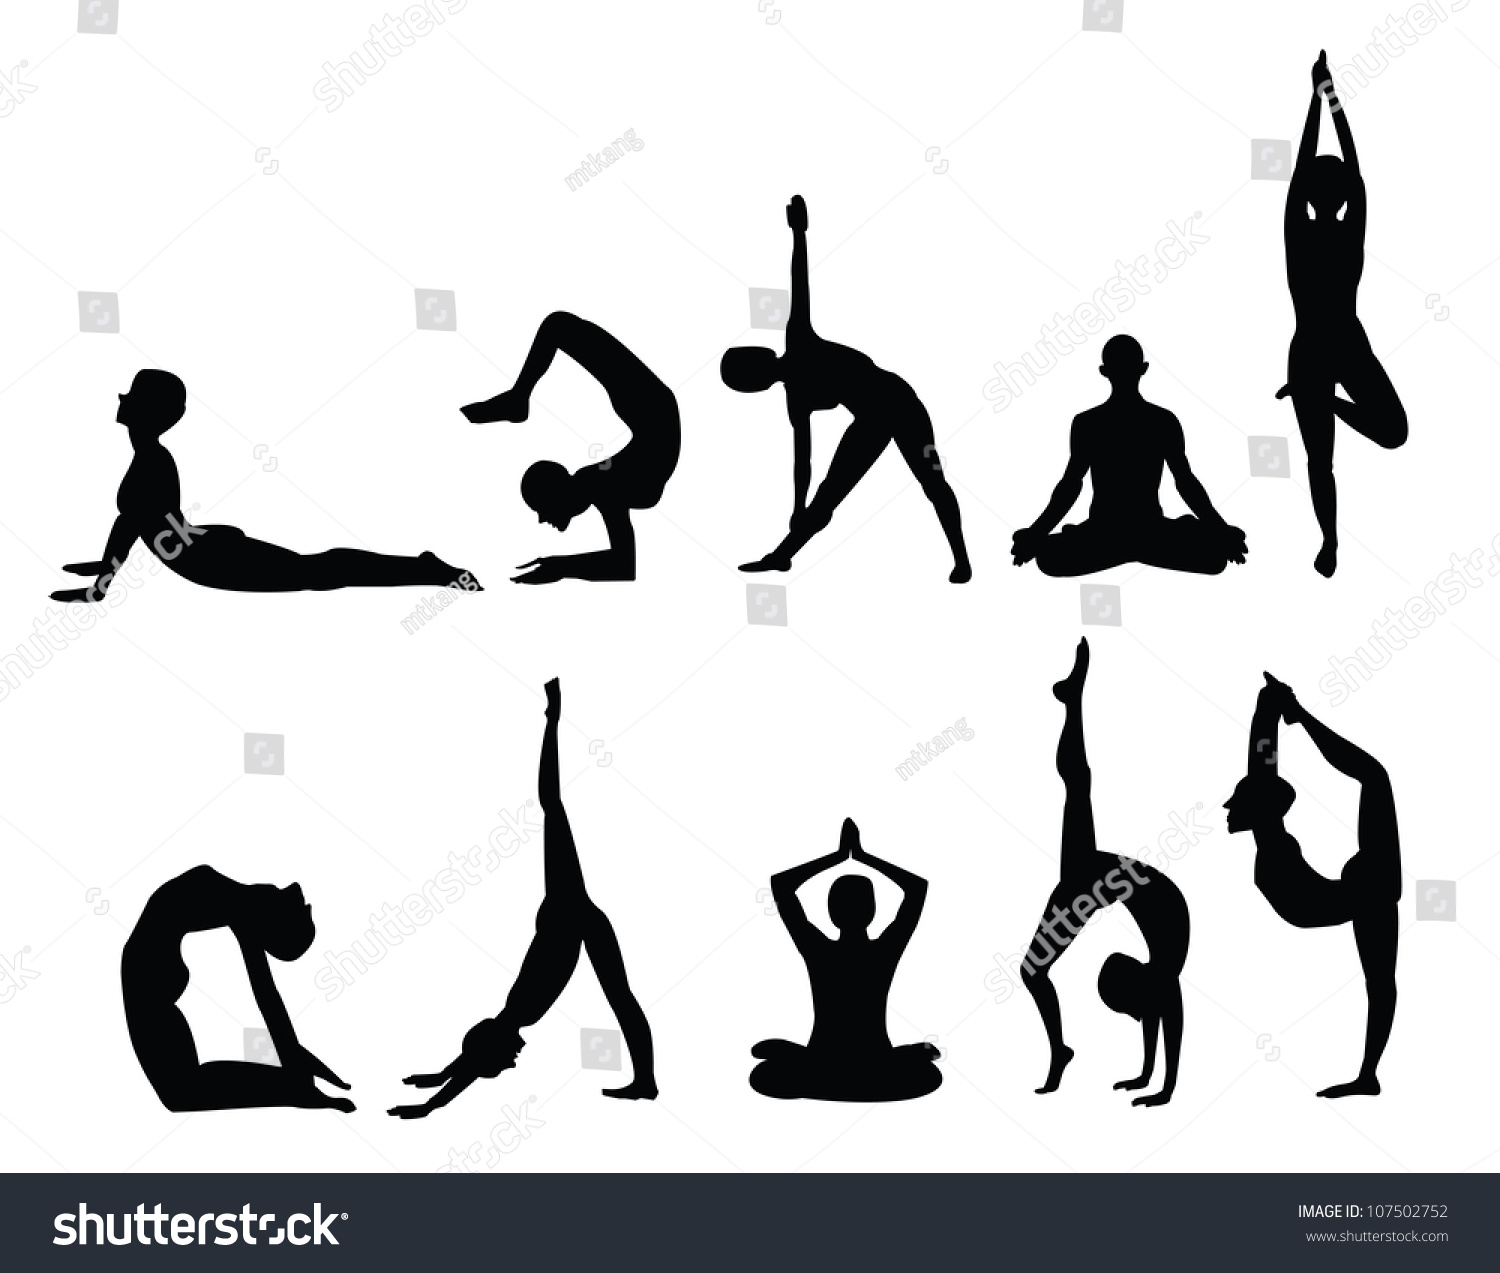 free yoga clipart downloads - photo #34